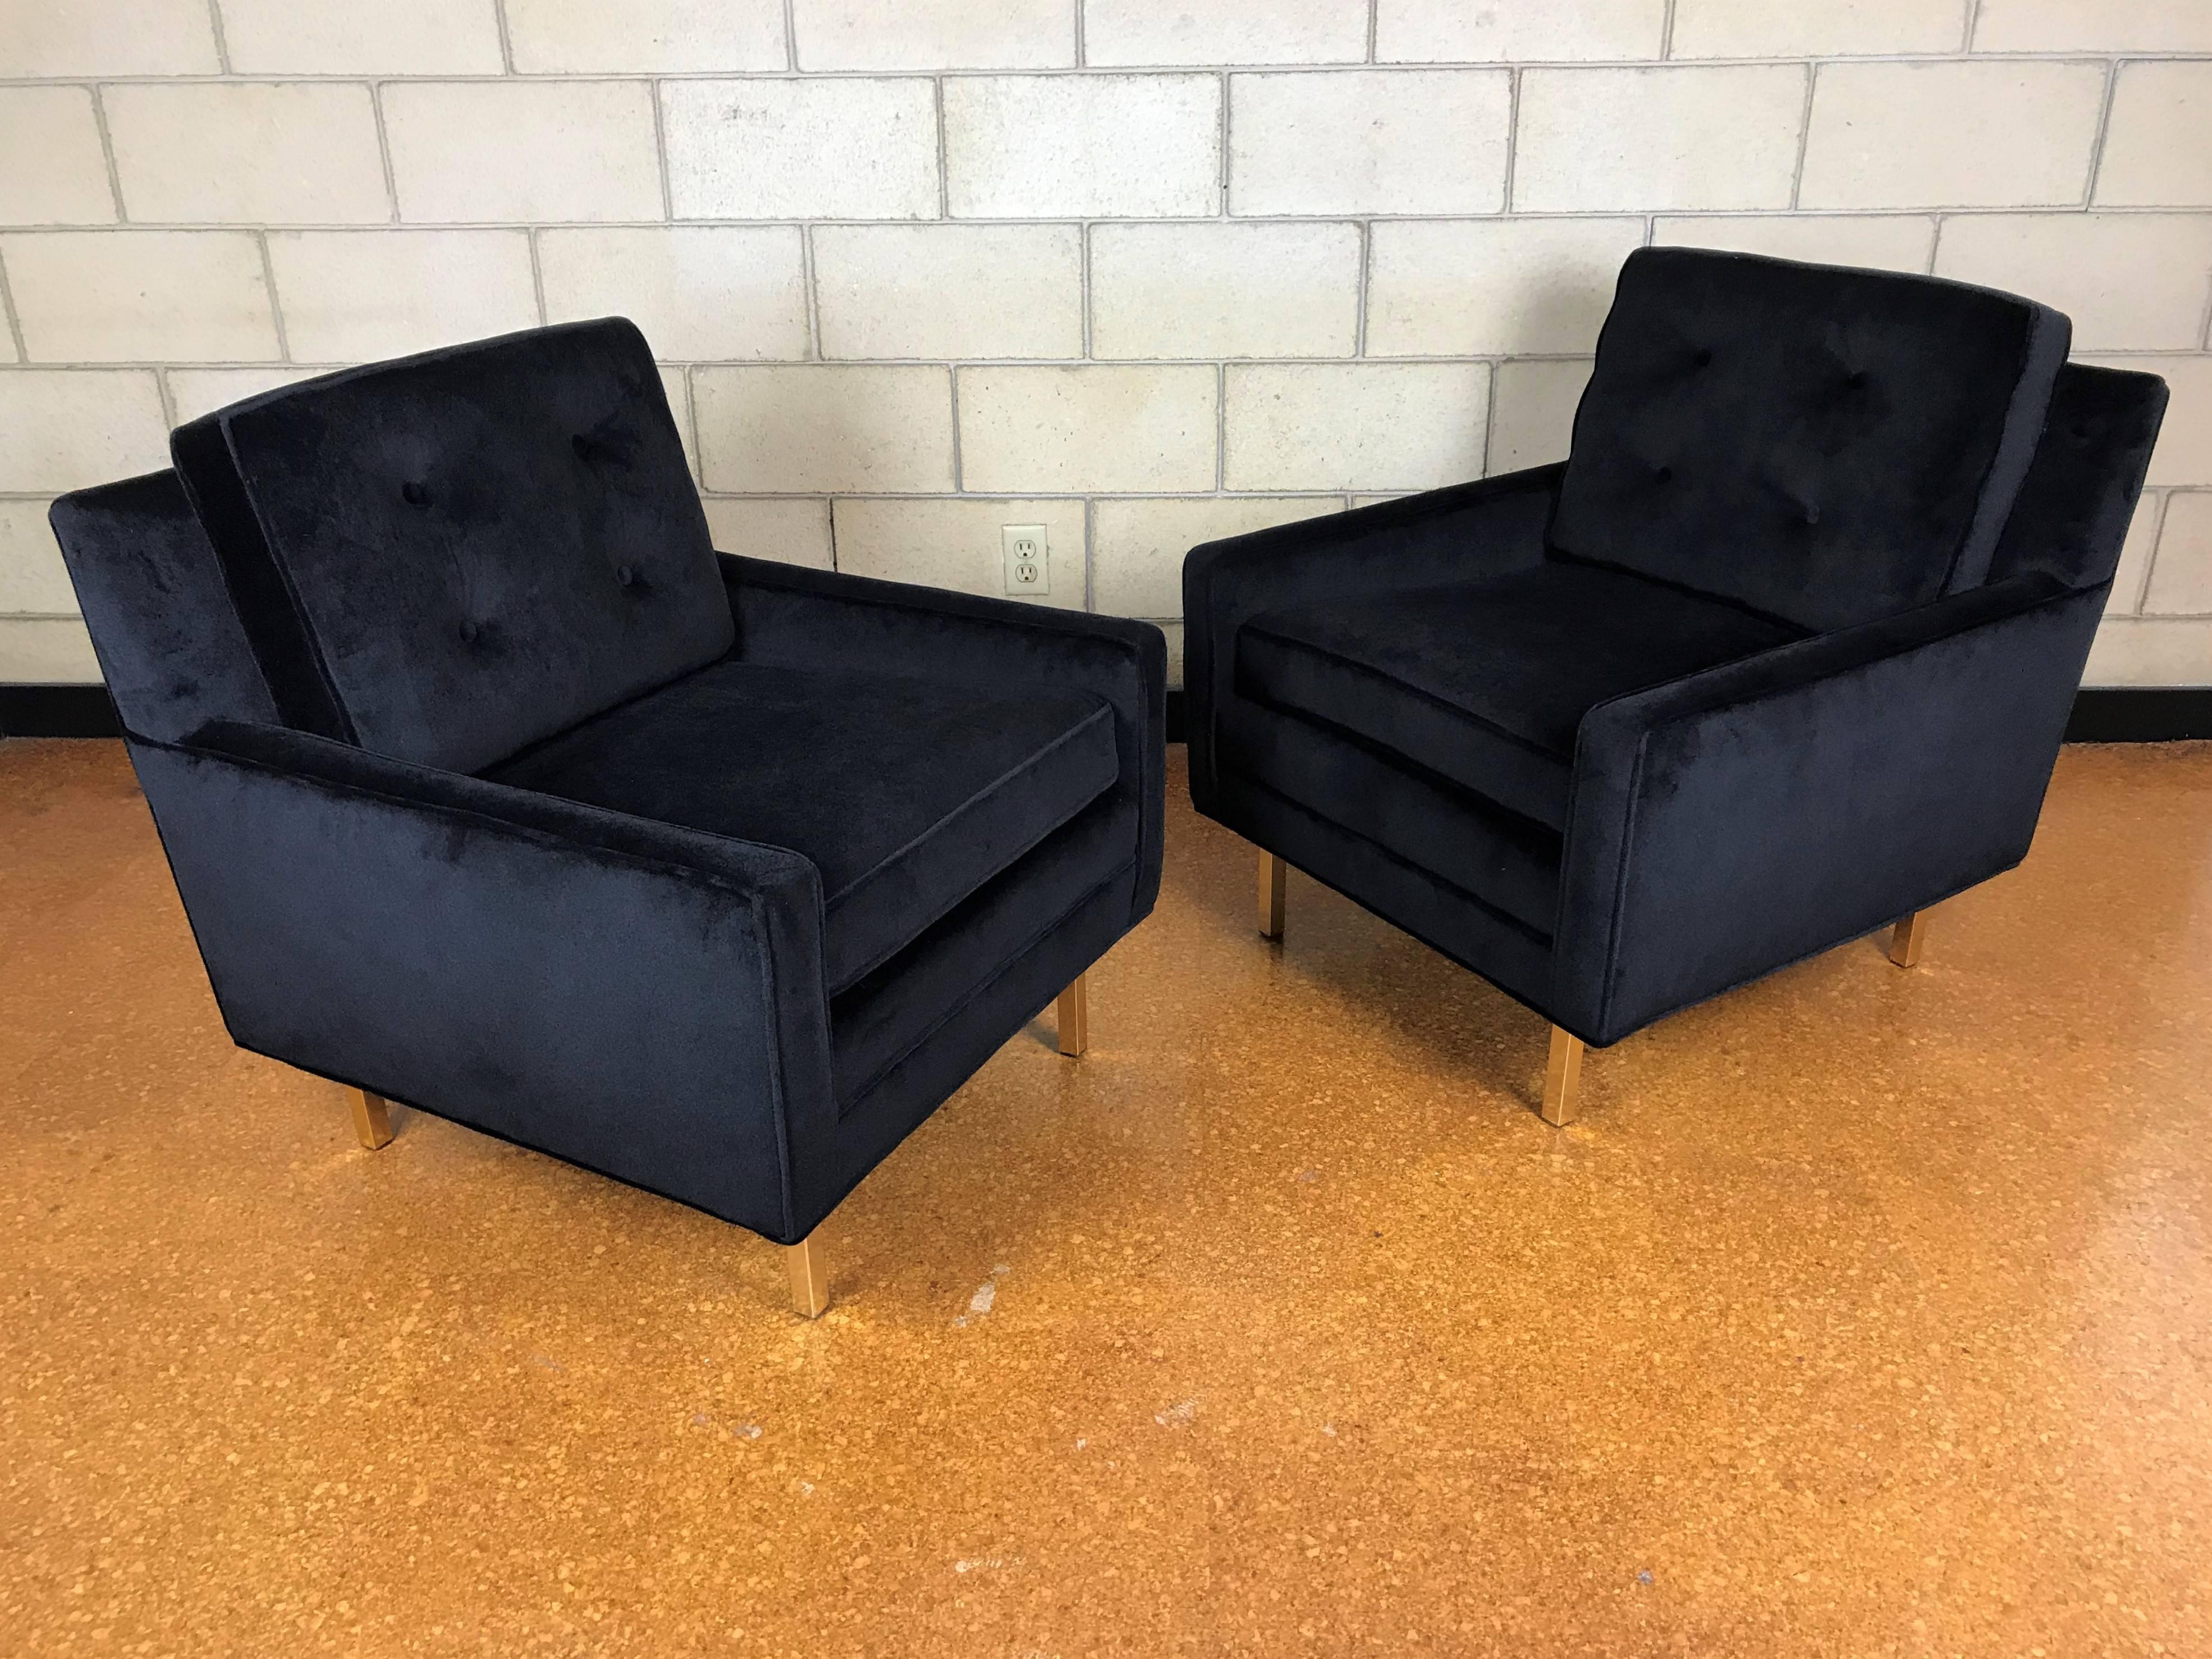 American Pair of Mid-Century Modern Tuxedo Lounge Chairs in Black Velvet with Brass Legs